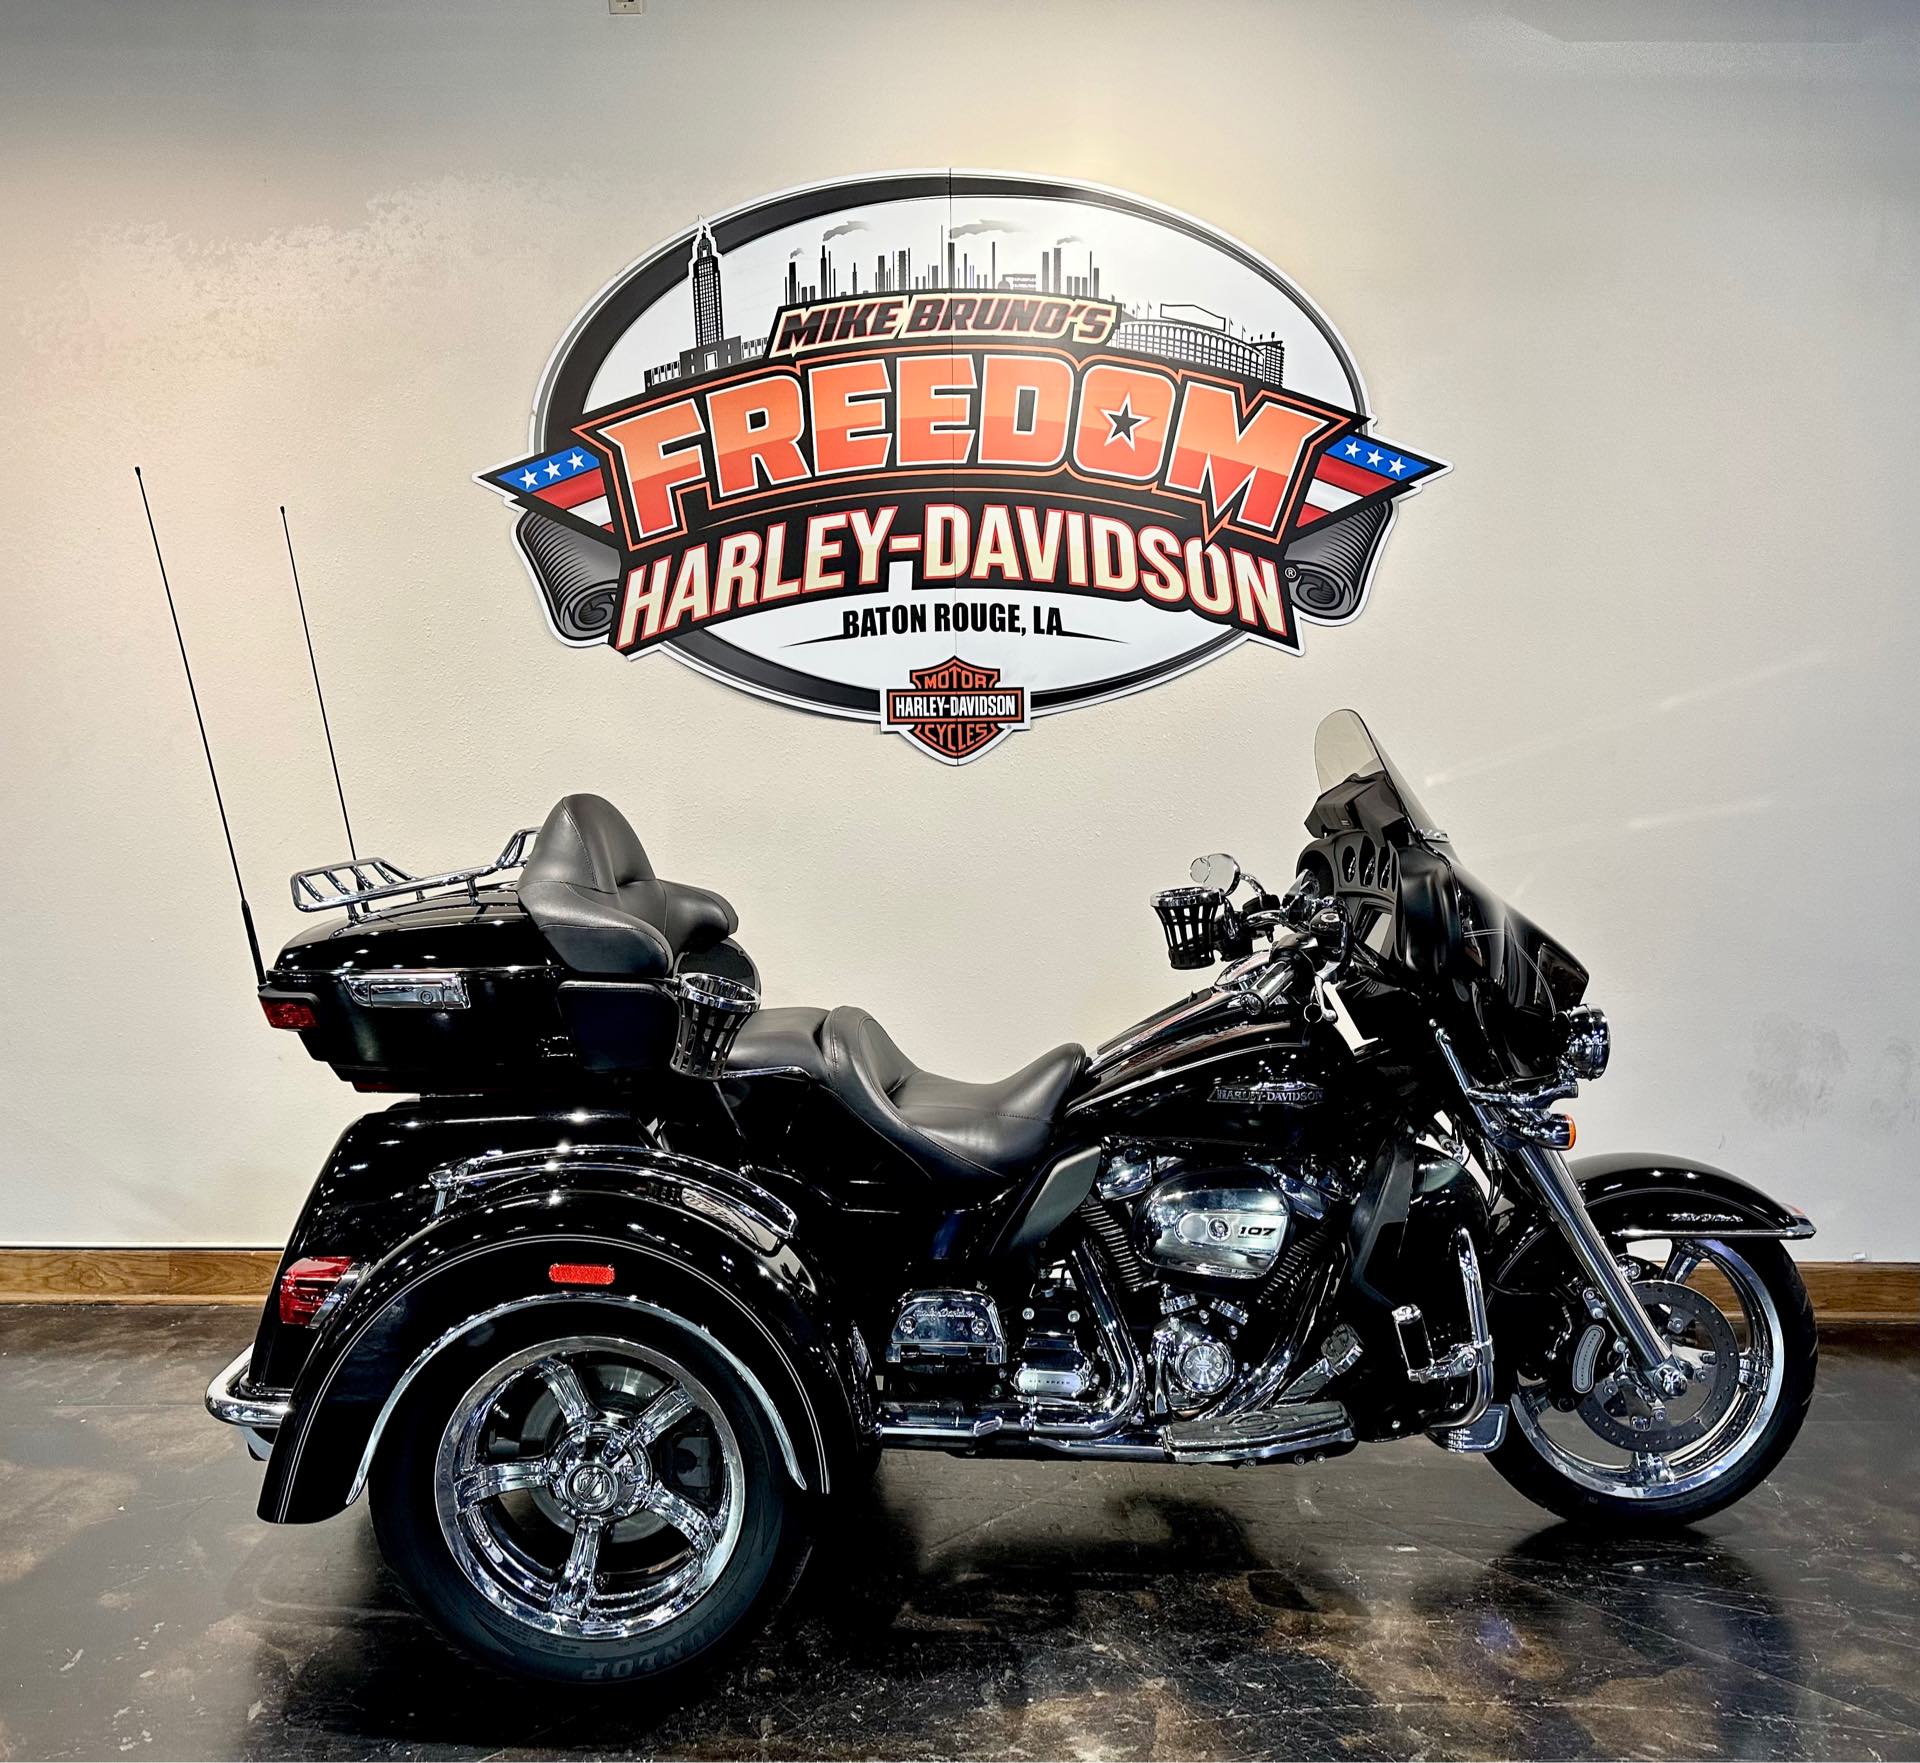 2017 Harley-Davidson Trike Tri Glide Ultra at Mike Bruno's Freedom Harley-Davidson